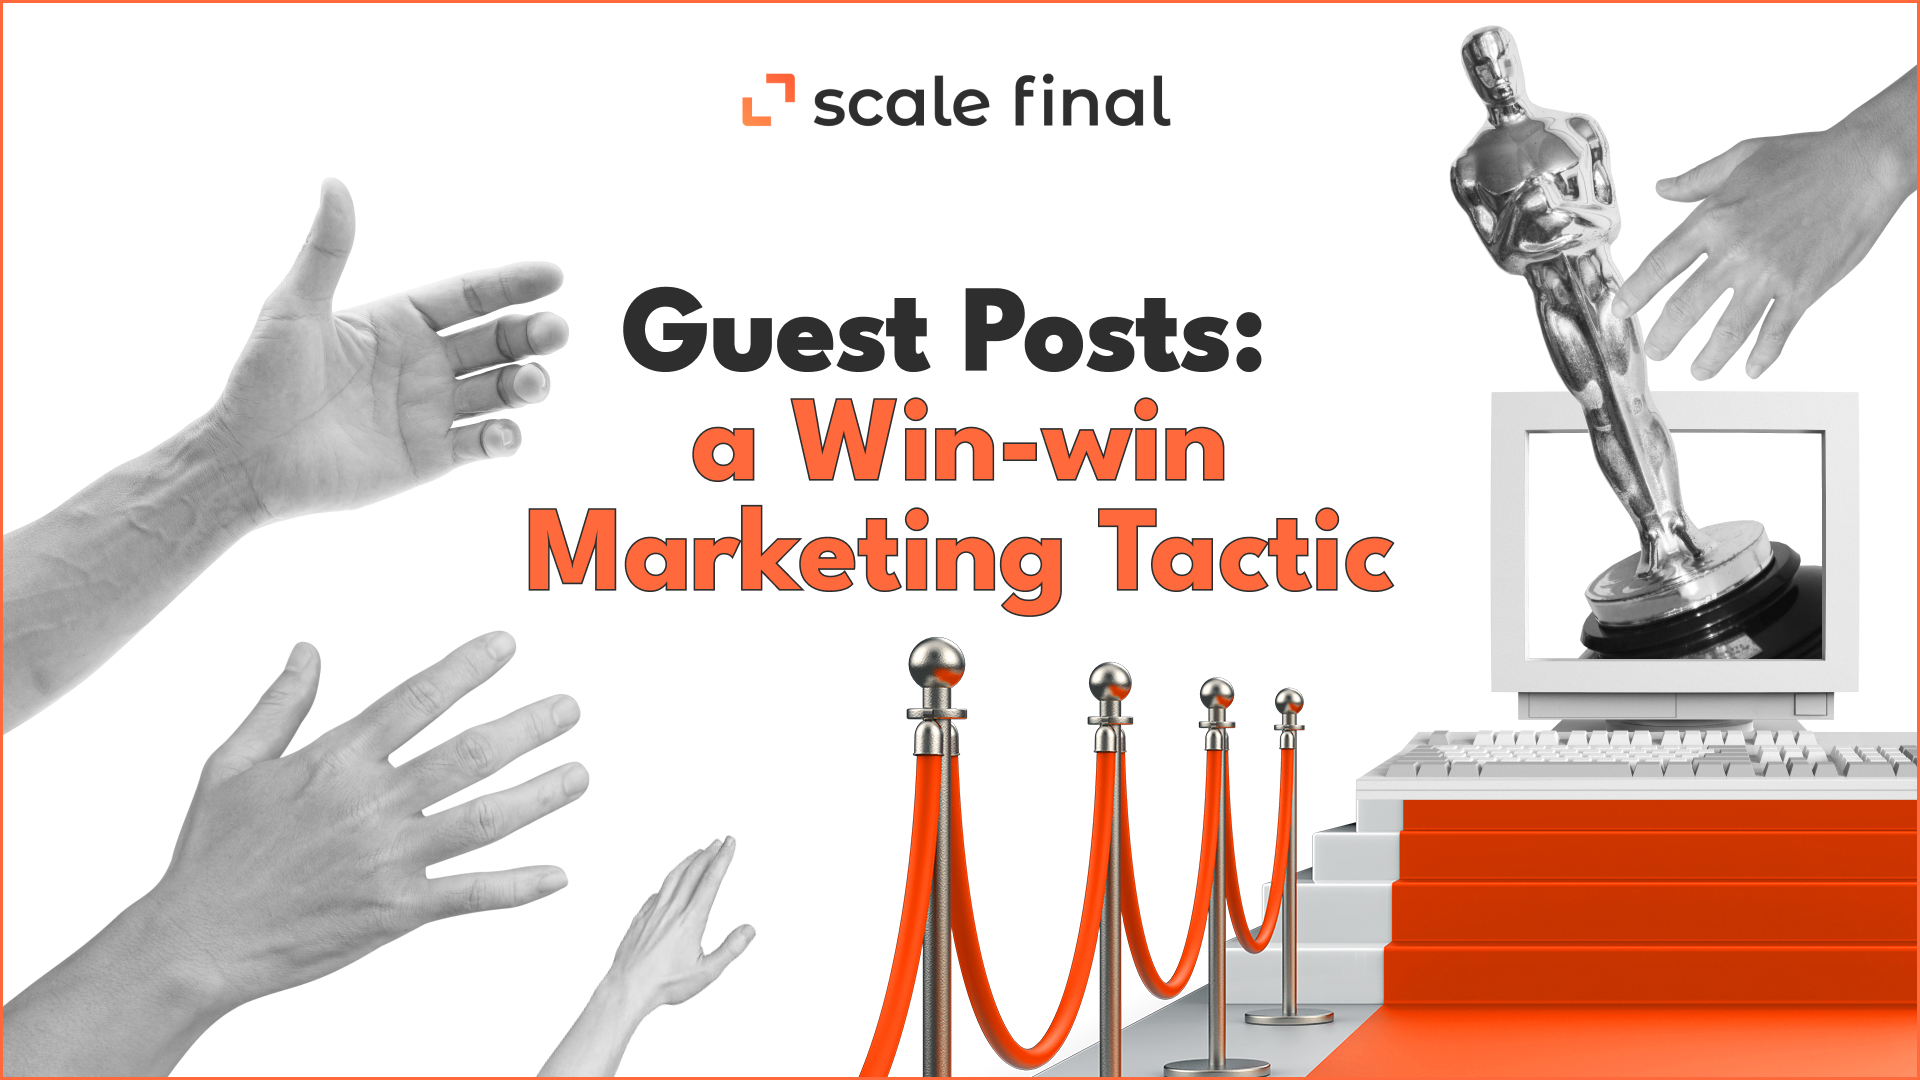 Guest Posts: A Win-win Marketing Tactic